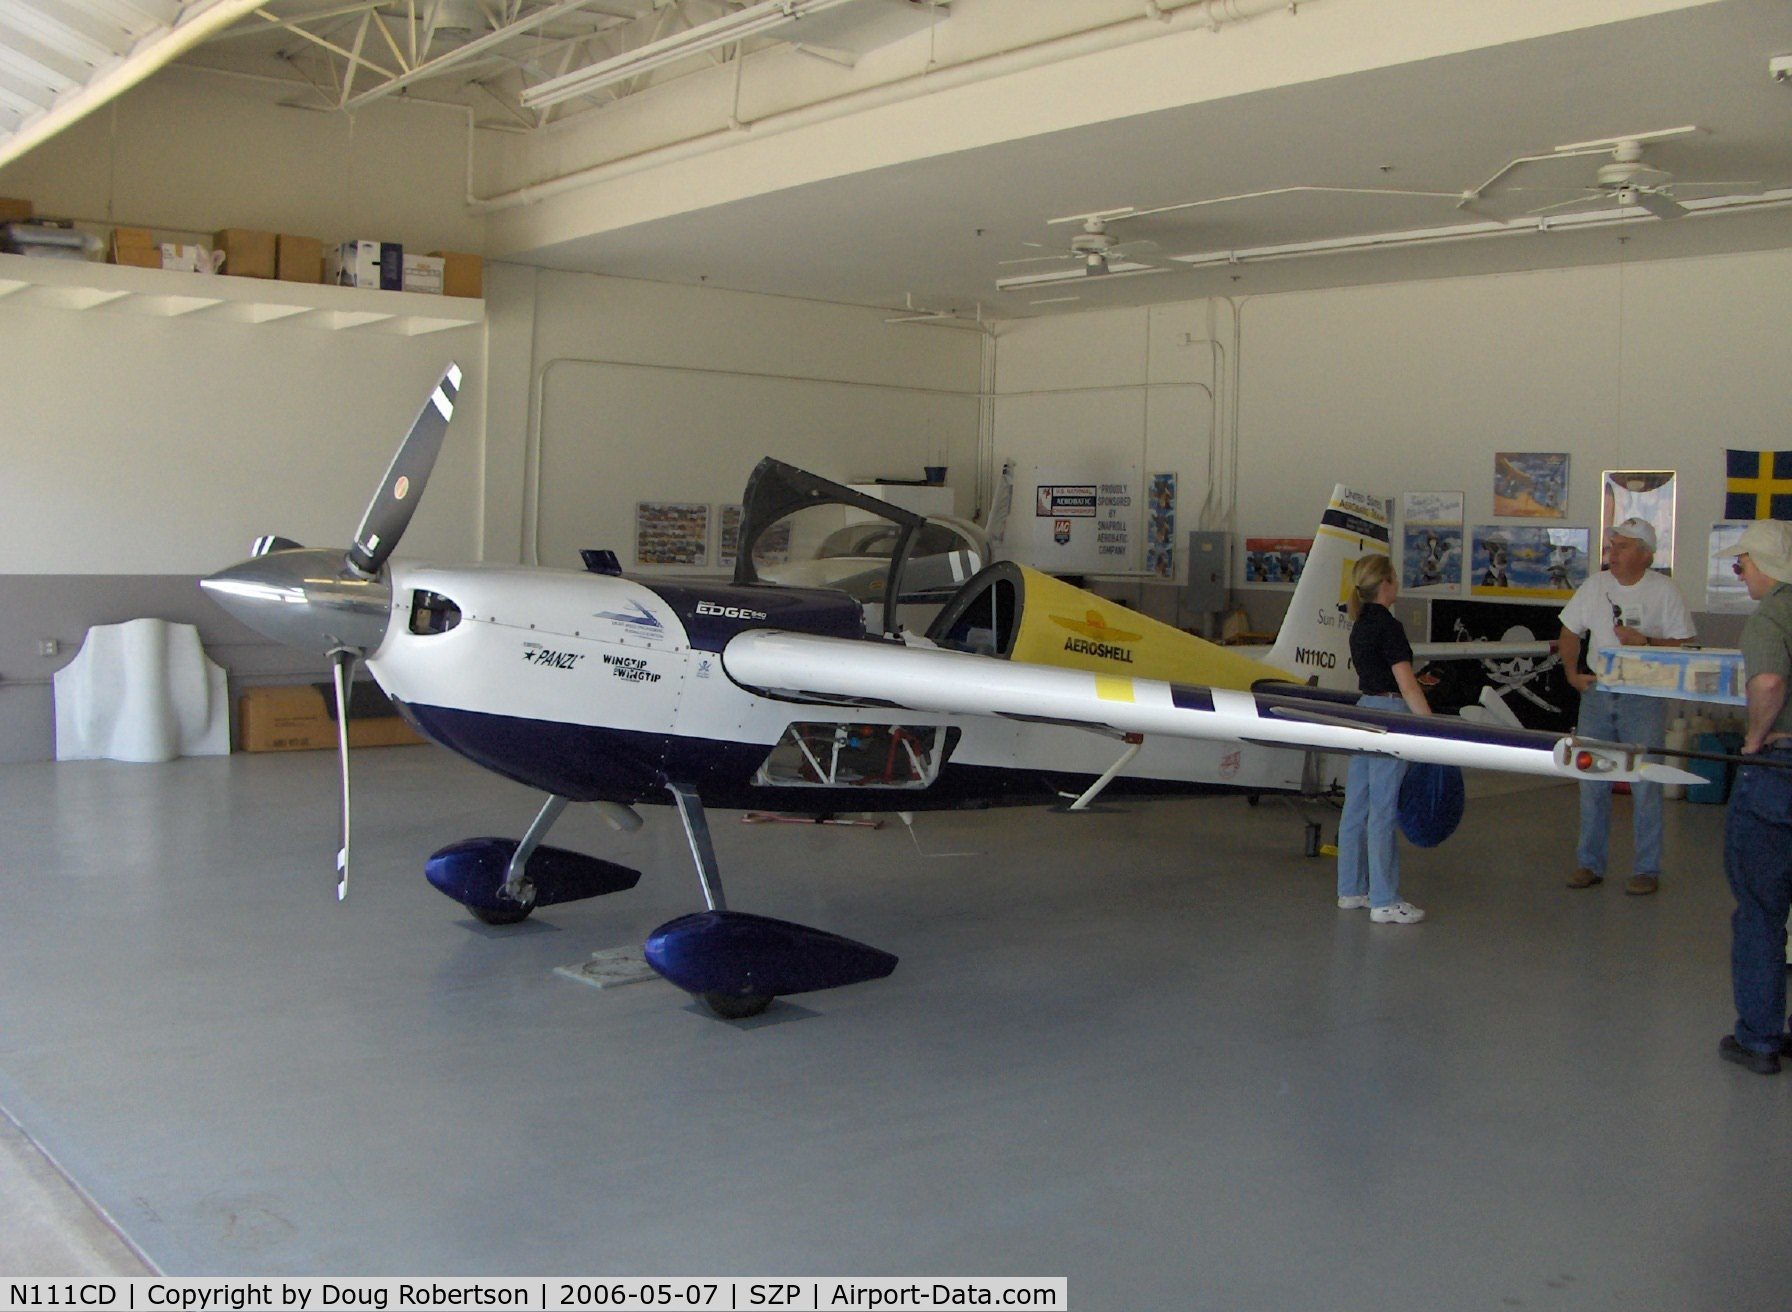 N111CD, 1999 Zivko Edge 540 C/N 0026, 1999 Zivco EDGE 540, Lycoming AEIO-540 330 Hp, in Vicki's hangar, Vicki Cruse-President International Aerobatic Club